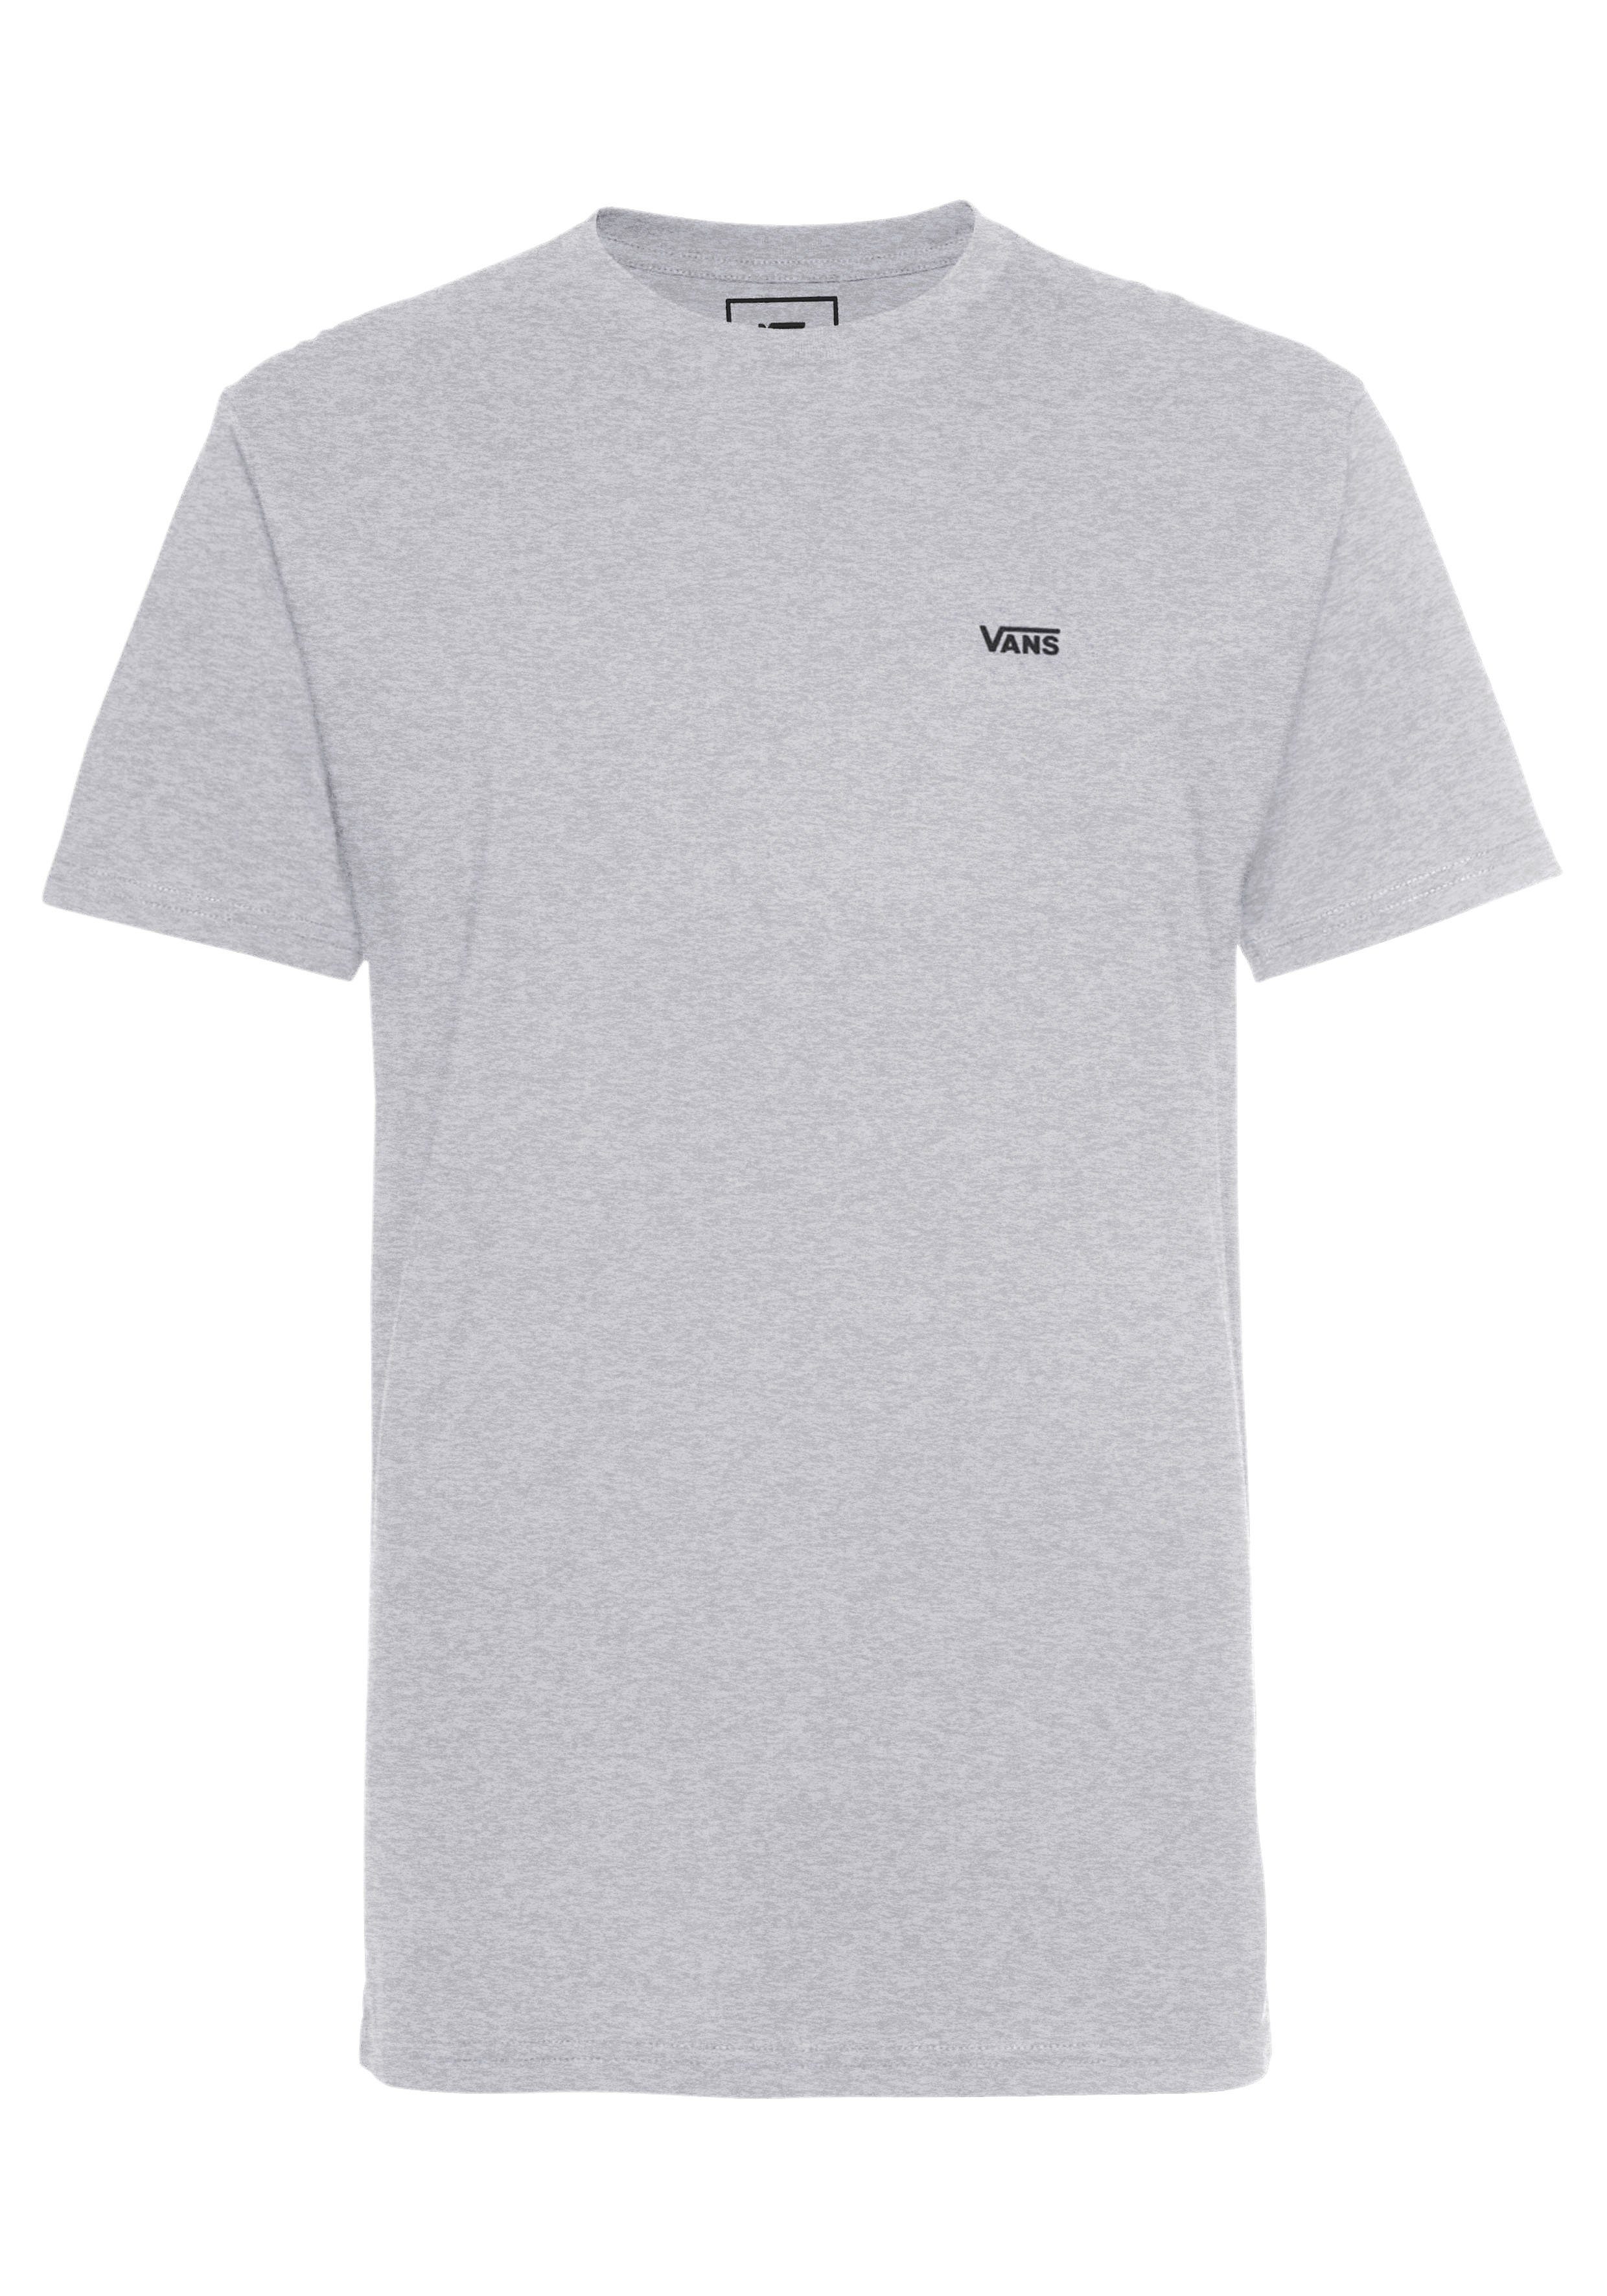 grau-schwarz LEFT LOGO TEE Vans CHEST T-Shirt